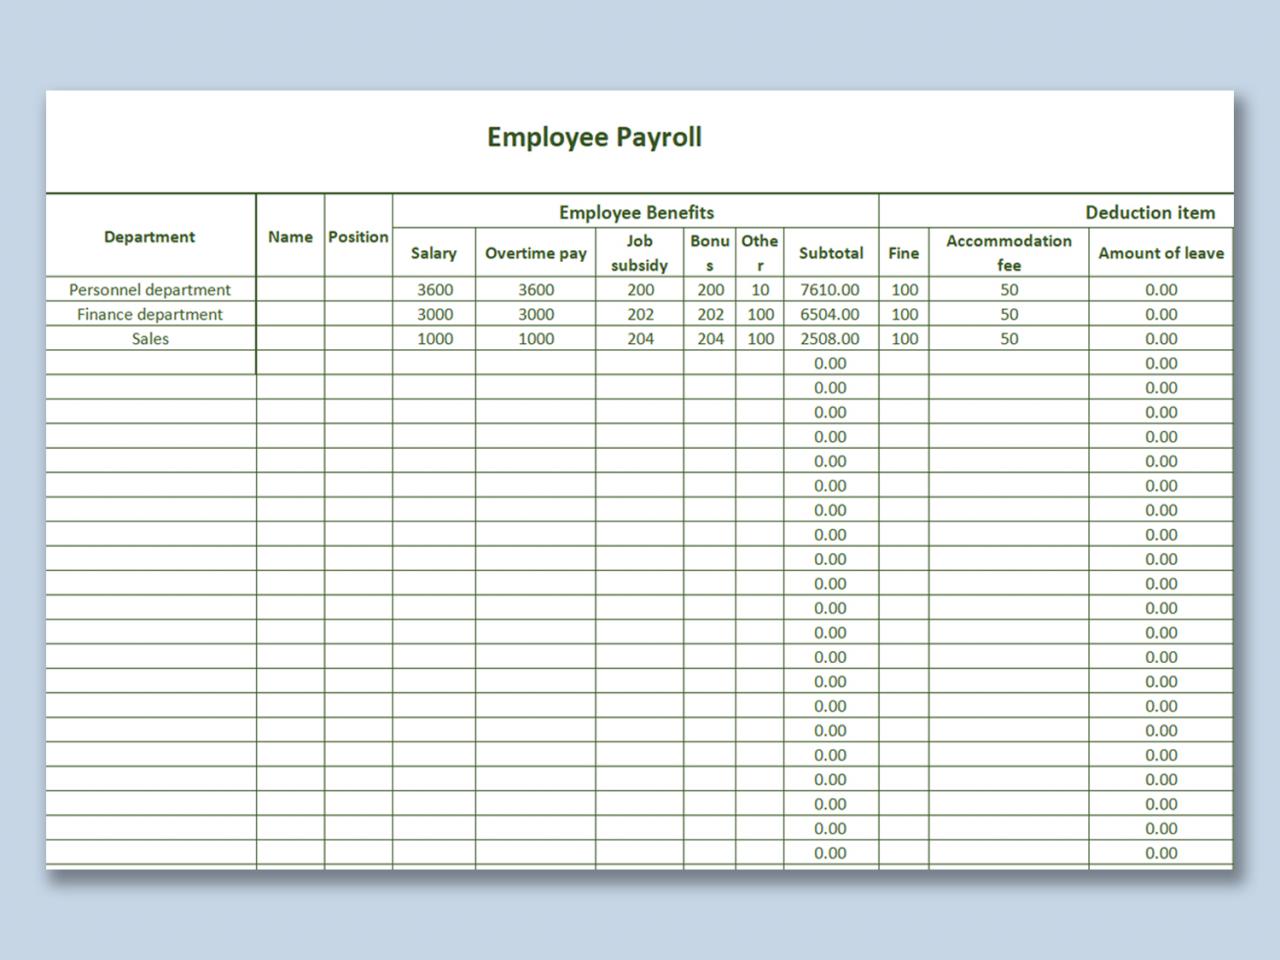 An employee payroll information sheet should include